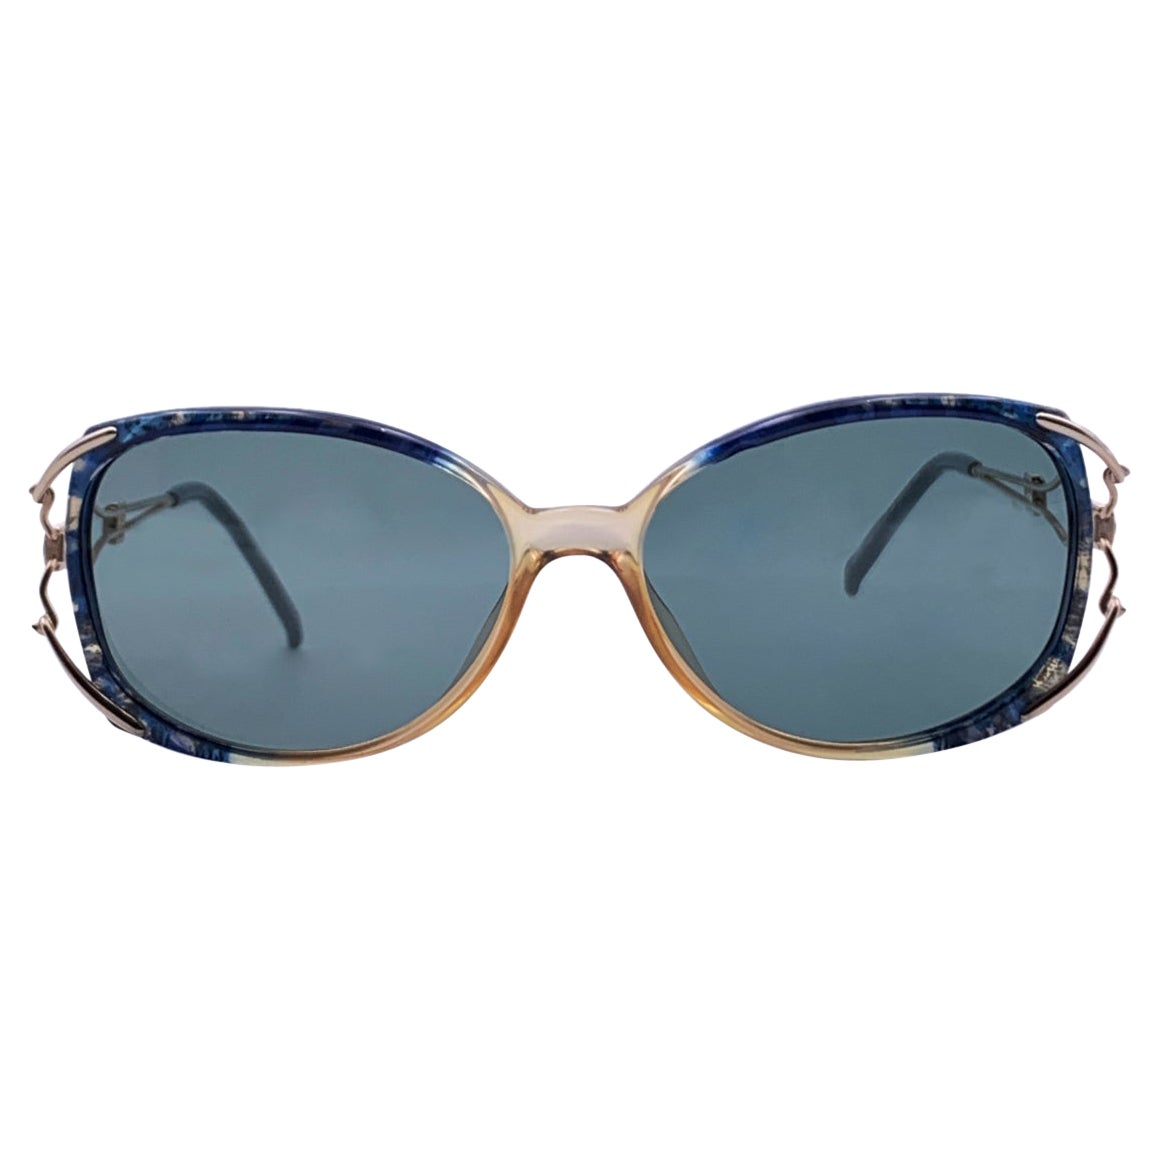 Sunglasses, Christian Dior, 2667, Blue, Acetate, Women, A+ - MINT, Sunglasses, Germany, O